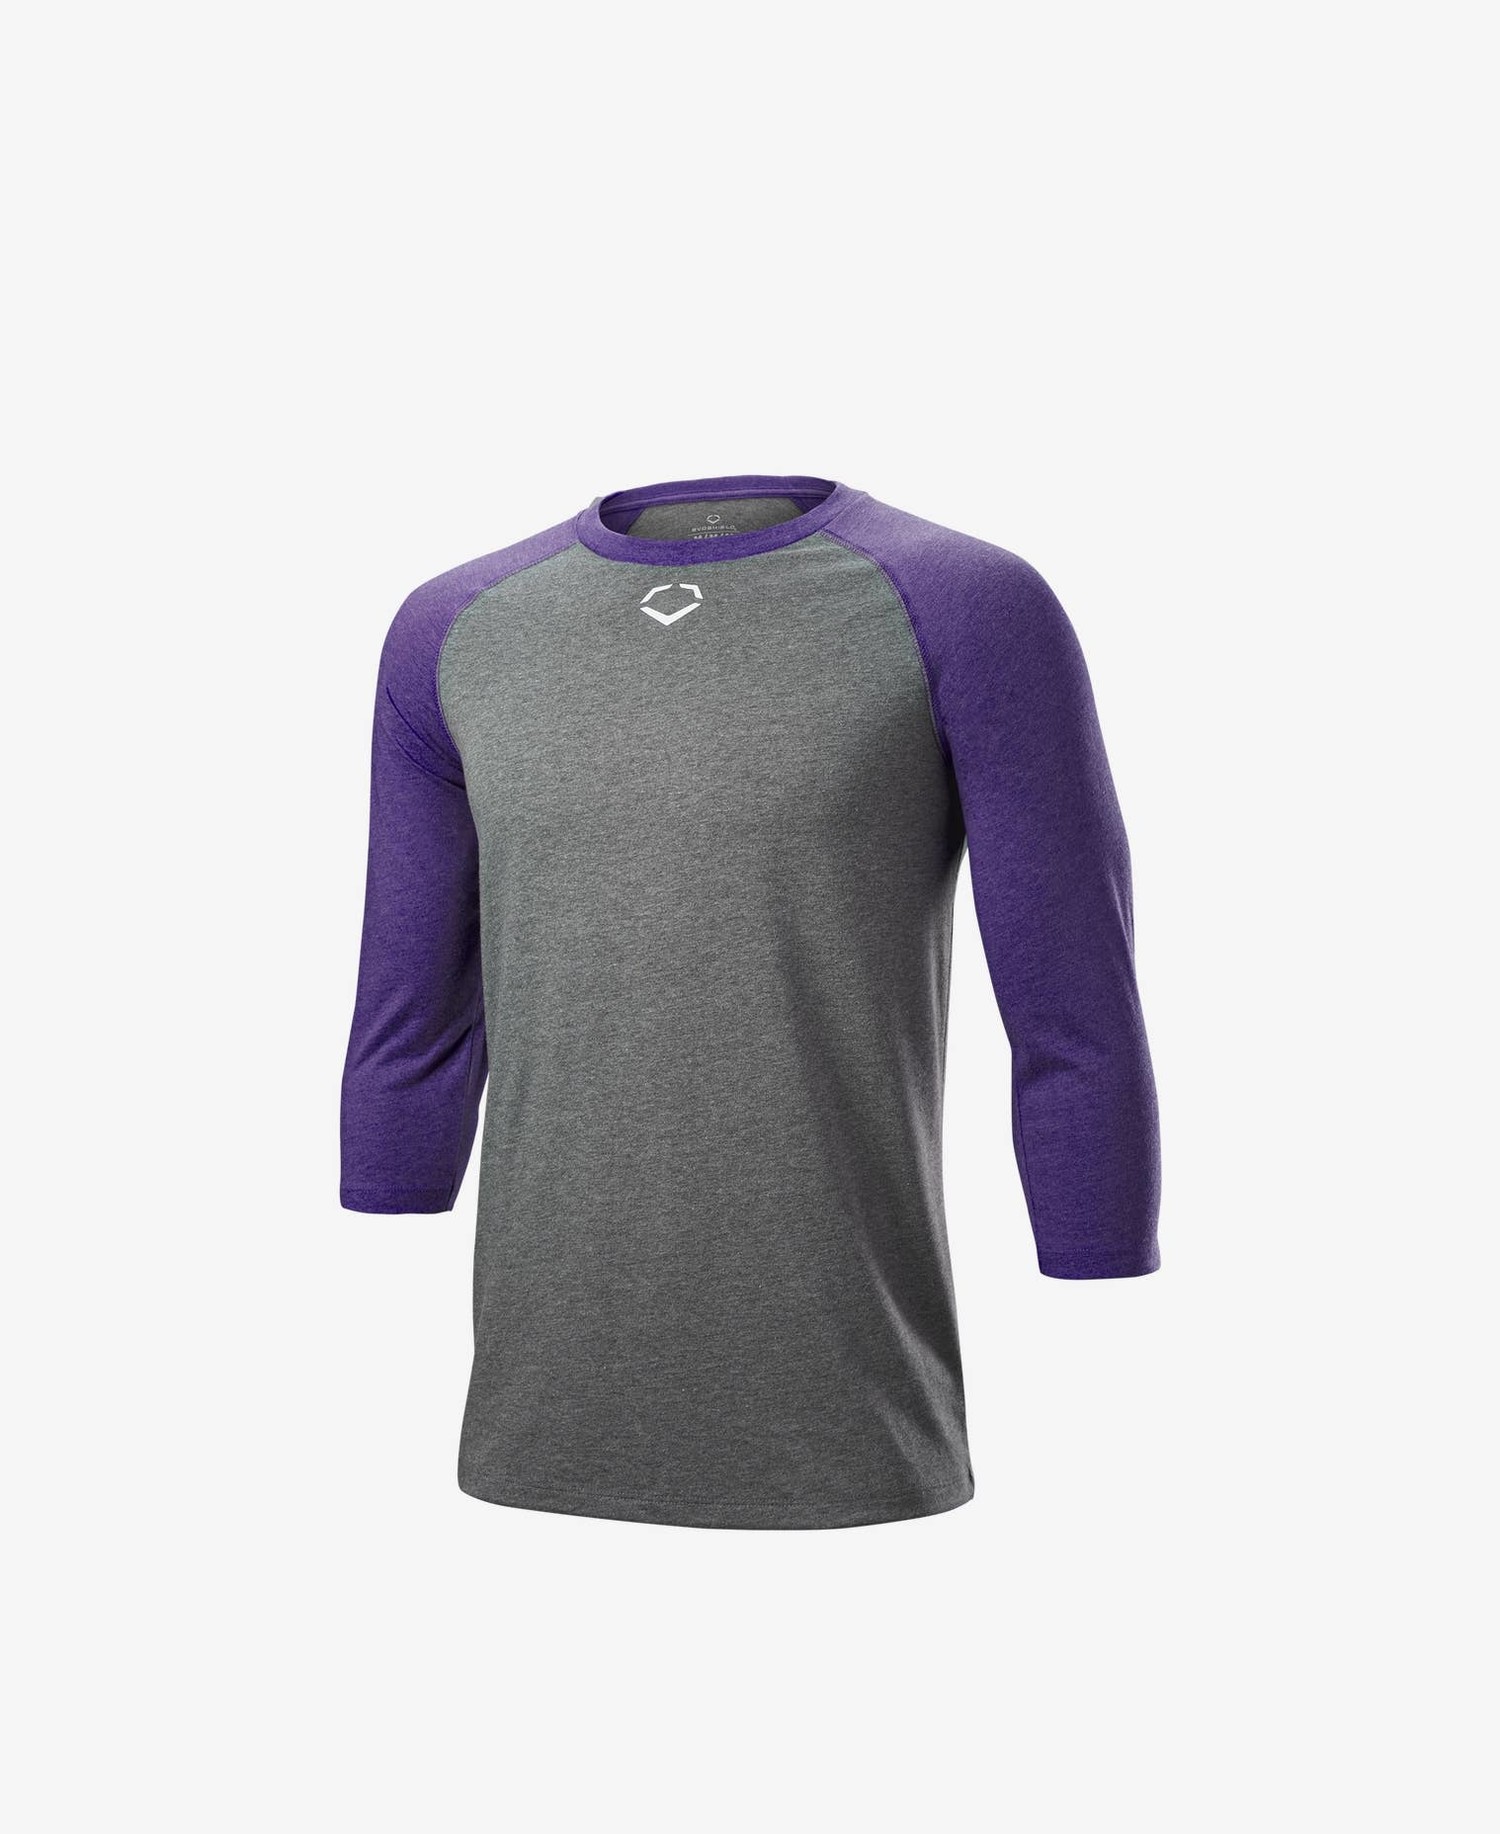 EvoShield Pro Team Baseball Adult Men's Mid Sleeve Workout Tee Shirt (Scarlet) 2XL